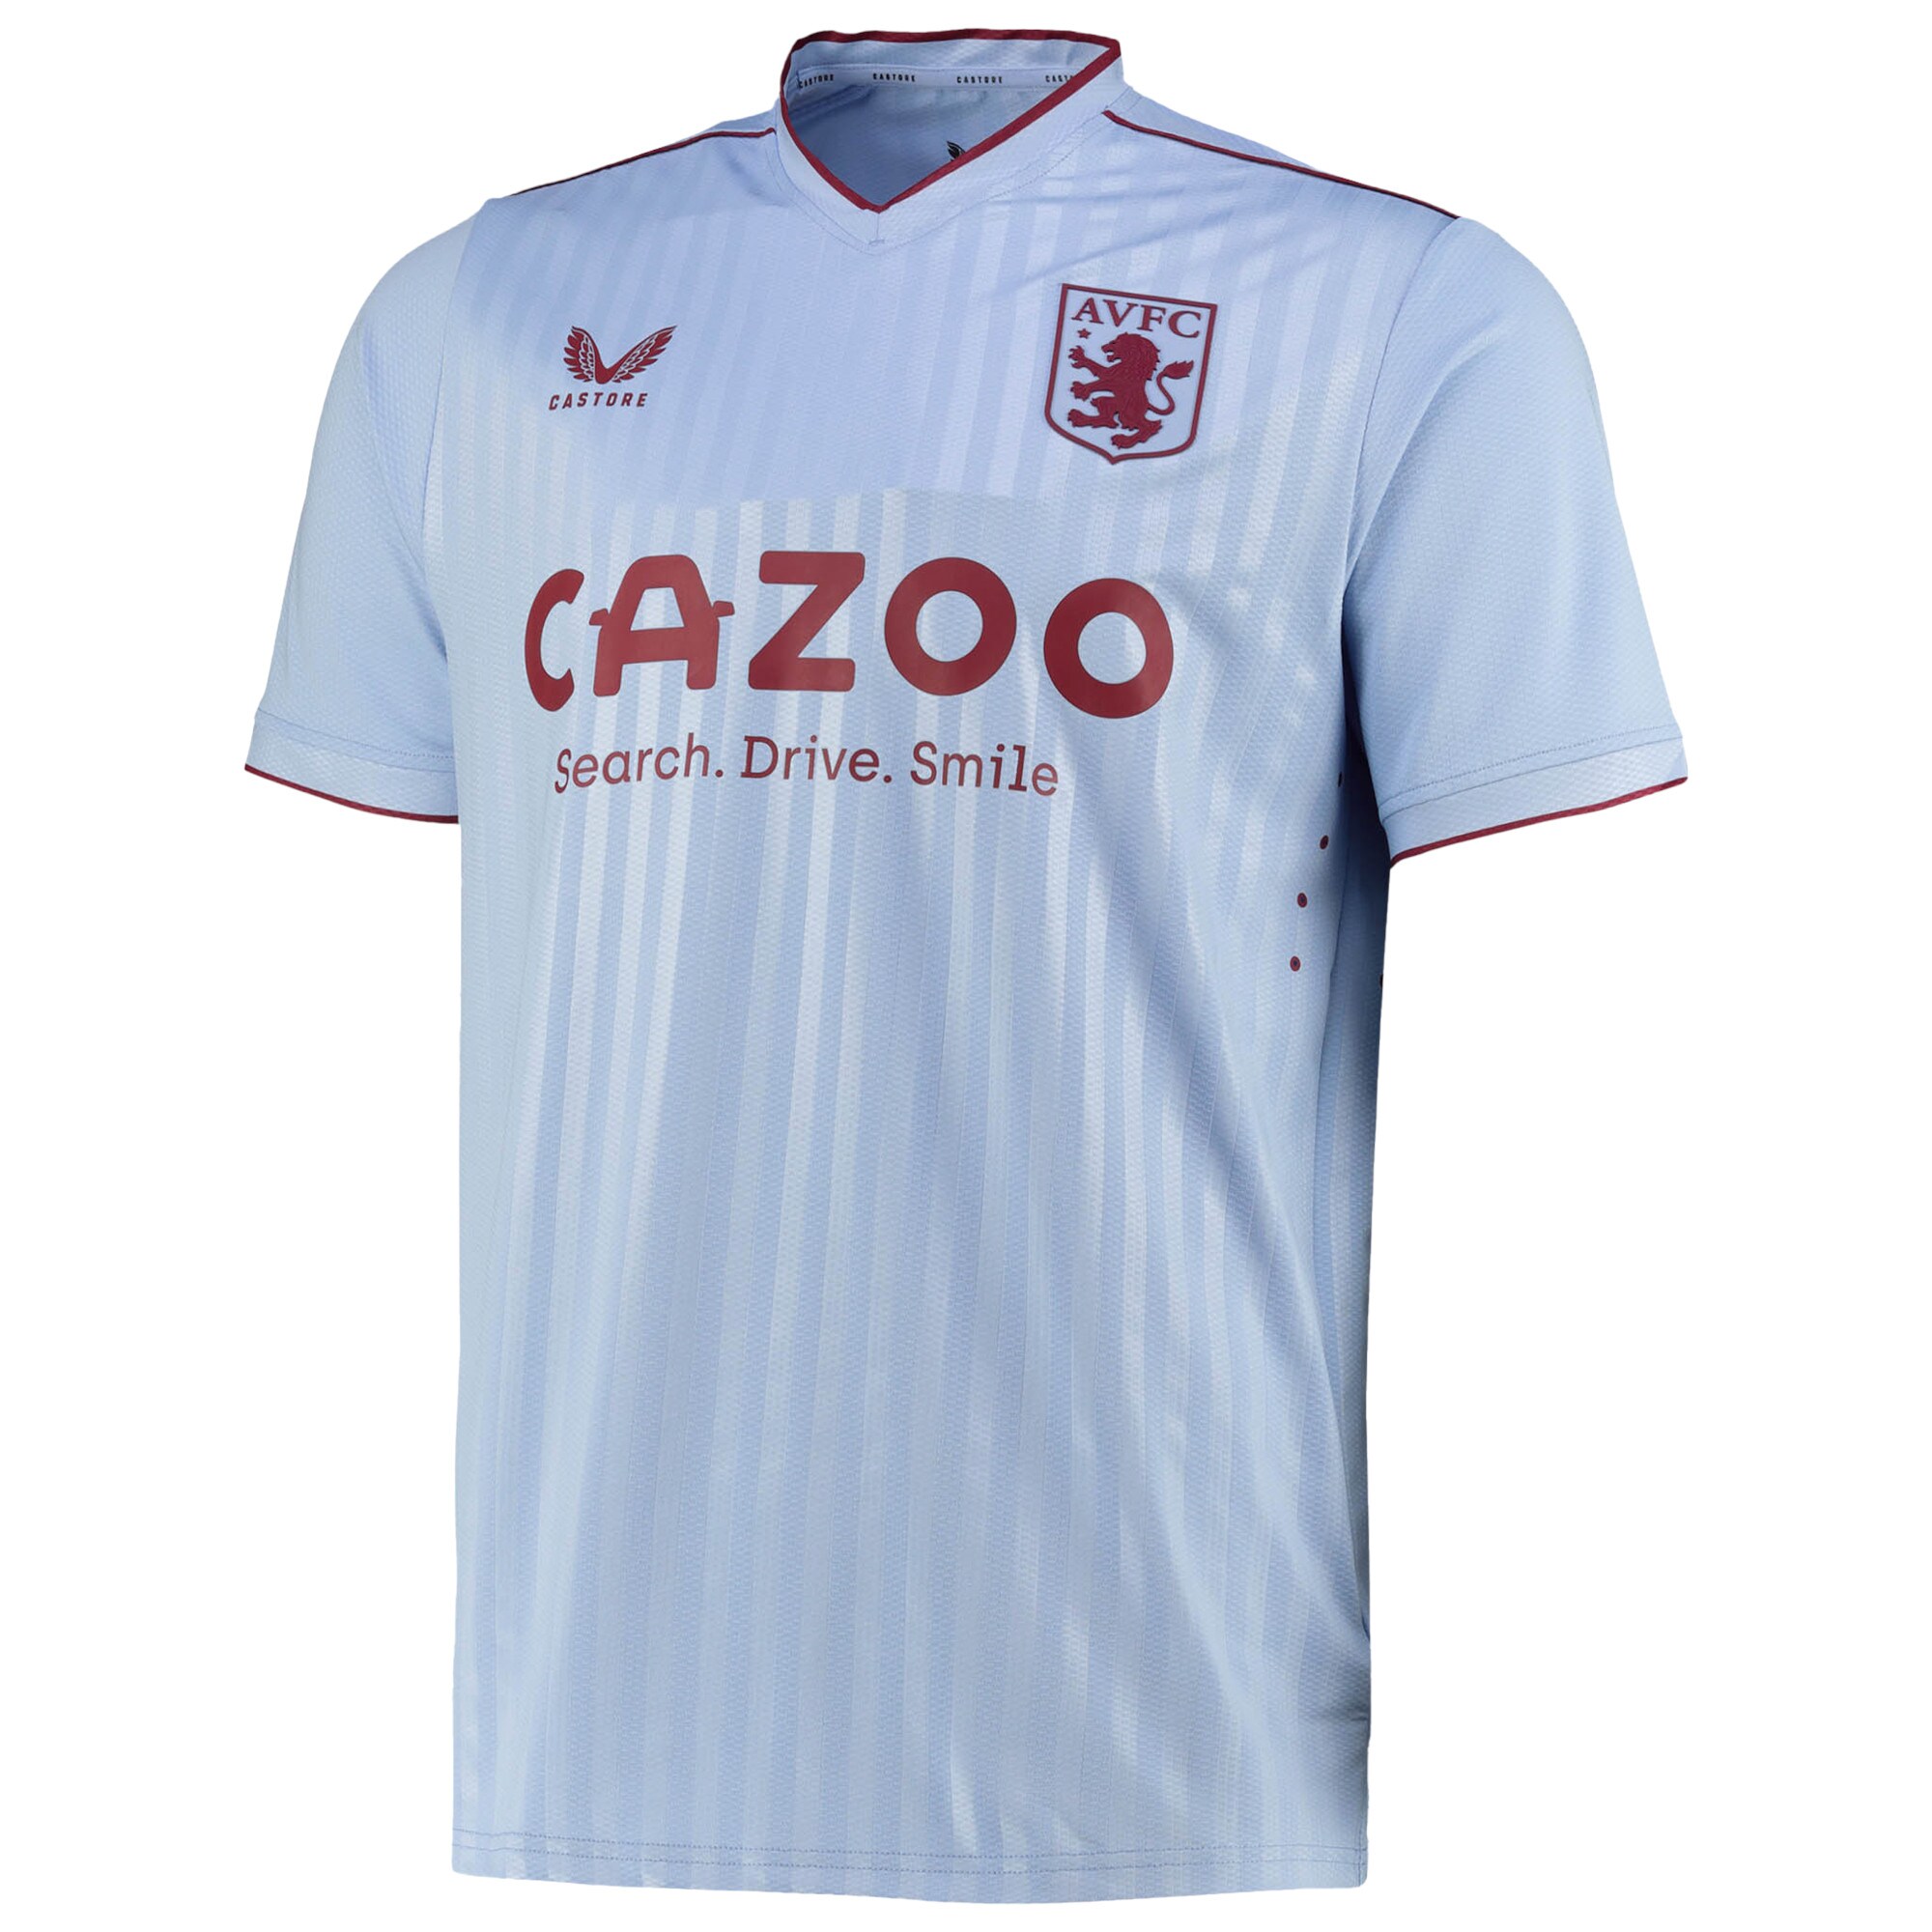 Aston Villa Away Pro Shirt 2022-23 with Bailey 31 printing